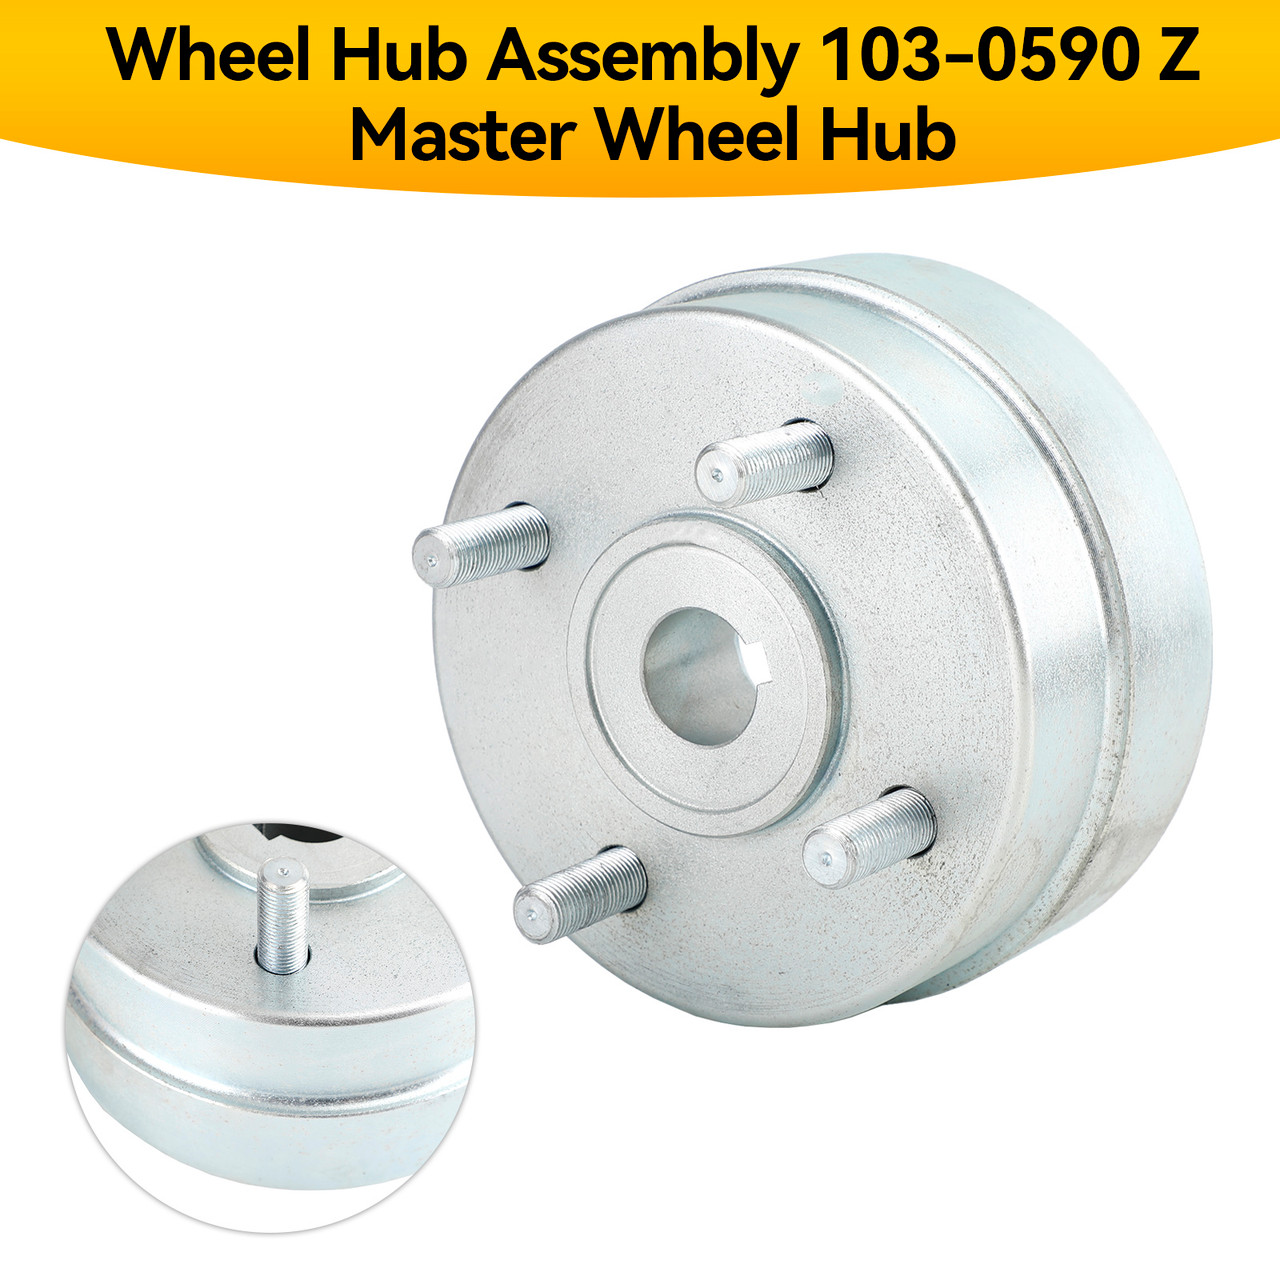 Wheel Hub Assembly 103-0590 Z Master Wheel Hub